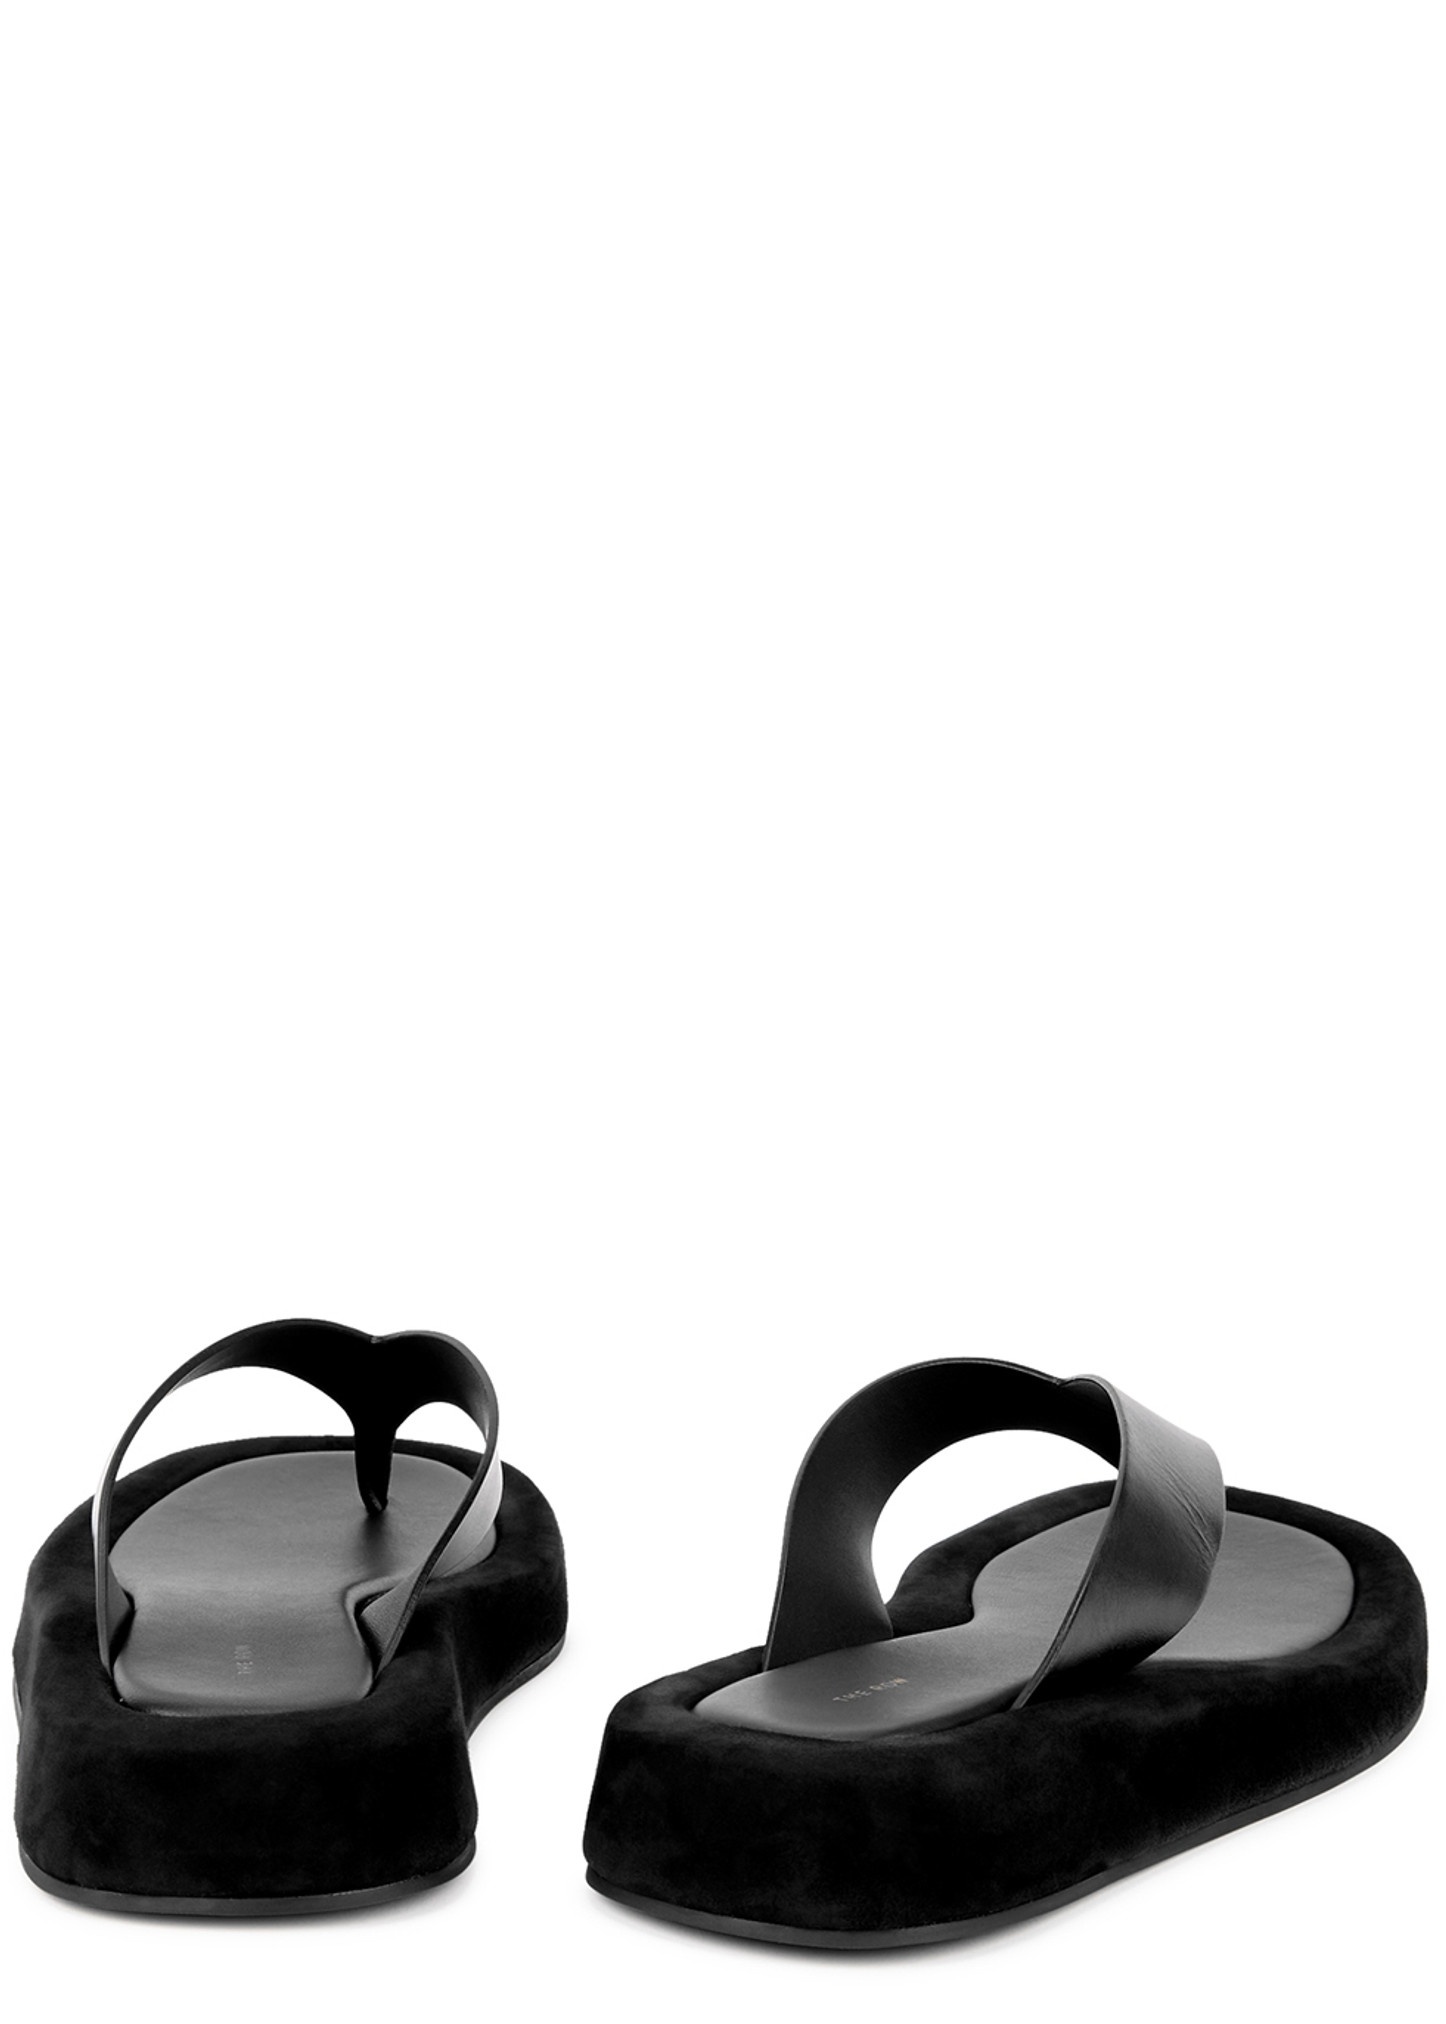 Ginza black leather flip flops - 3